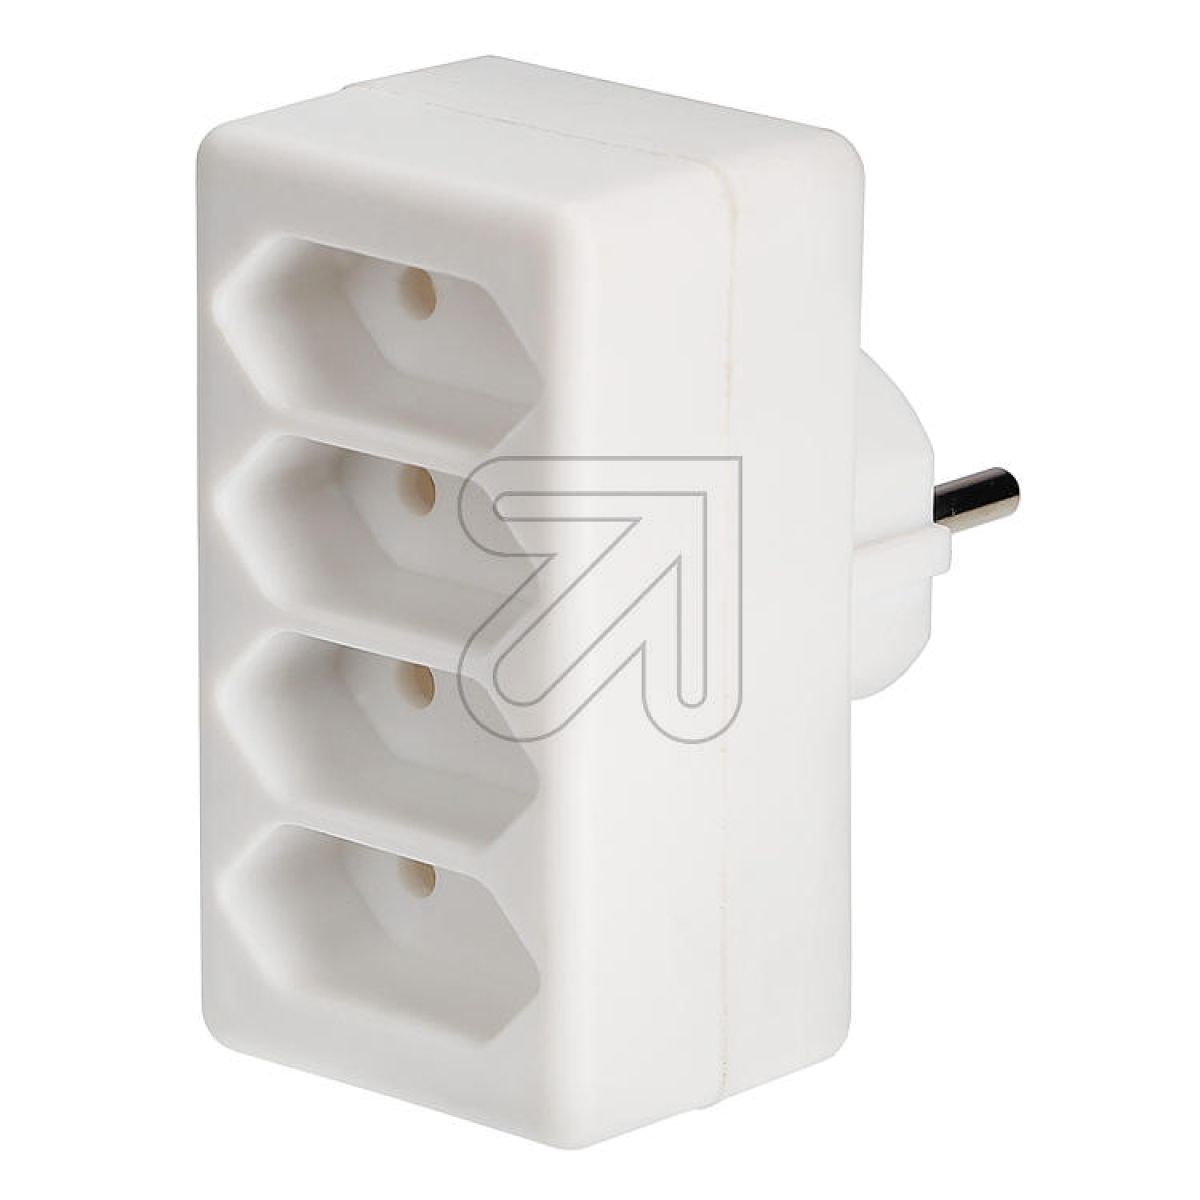 Martin-KaiserEuro quadruple plug white 48451Article-No: 061400